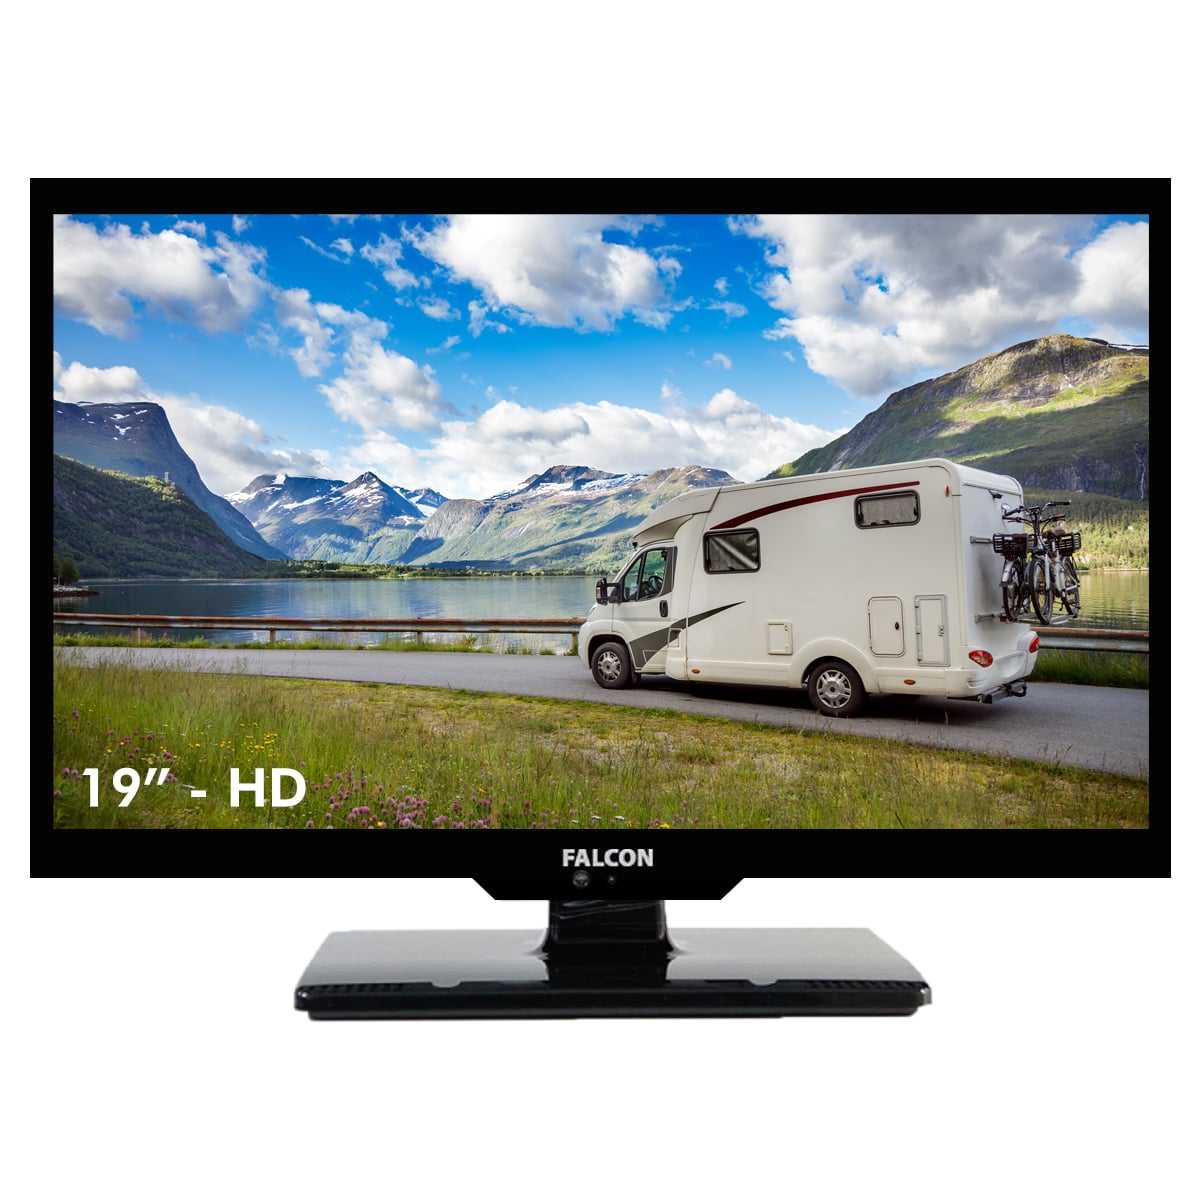 Falcon LED TV S4 Serie 19 Zoll / 48 cm Camping Fernseher (HD 230/24/12V DVB-S2 DVB-C/T2) von Falcon